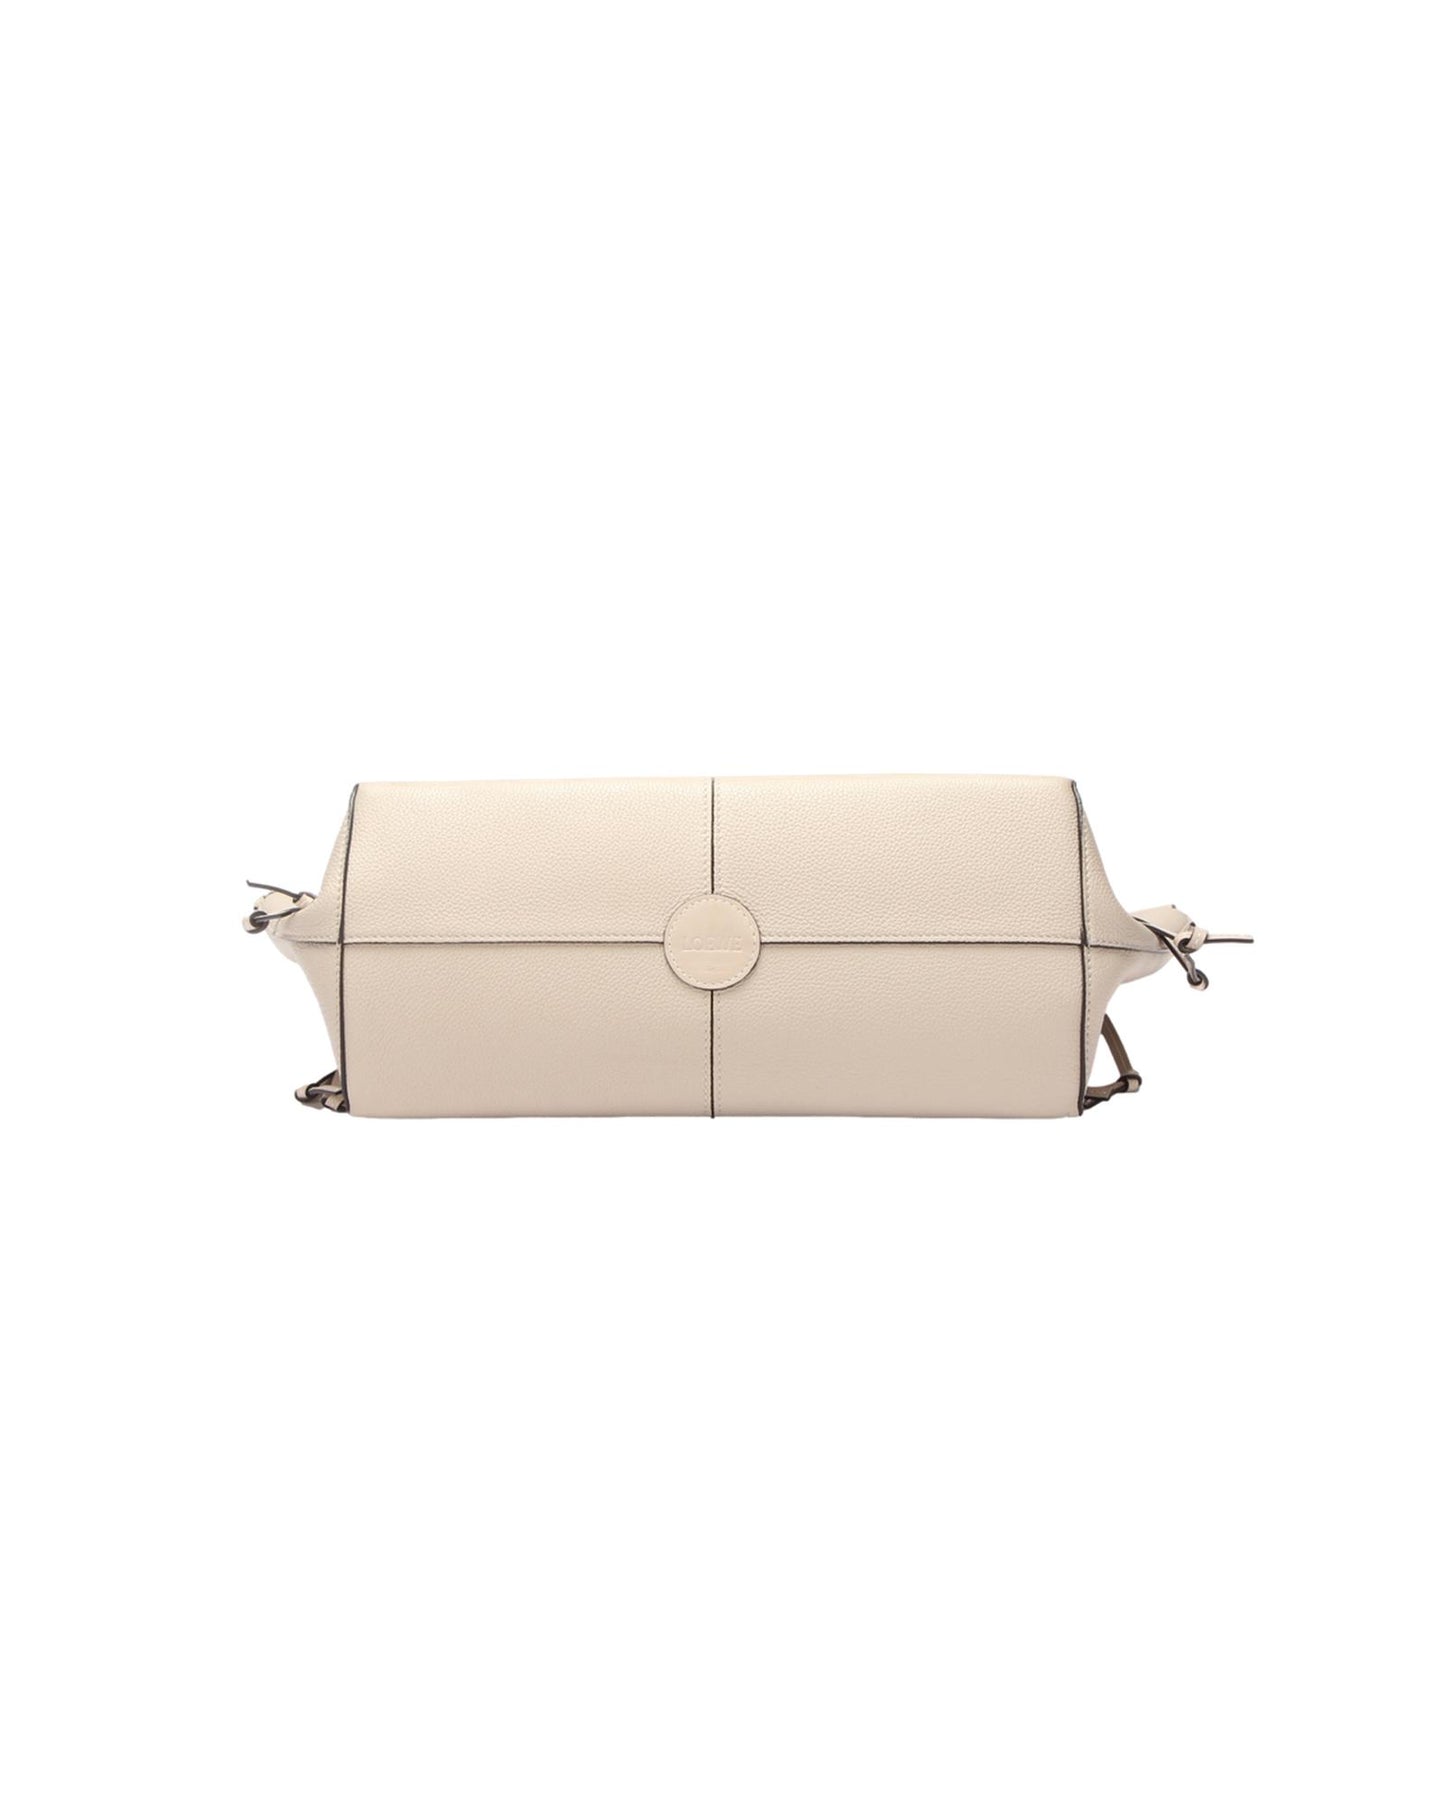 Loewe Women's White Leather Cushion Tote Bag in White